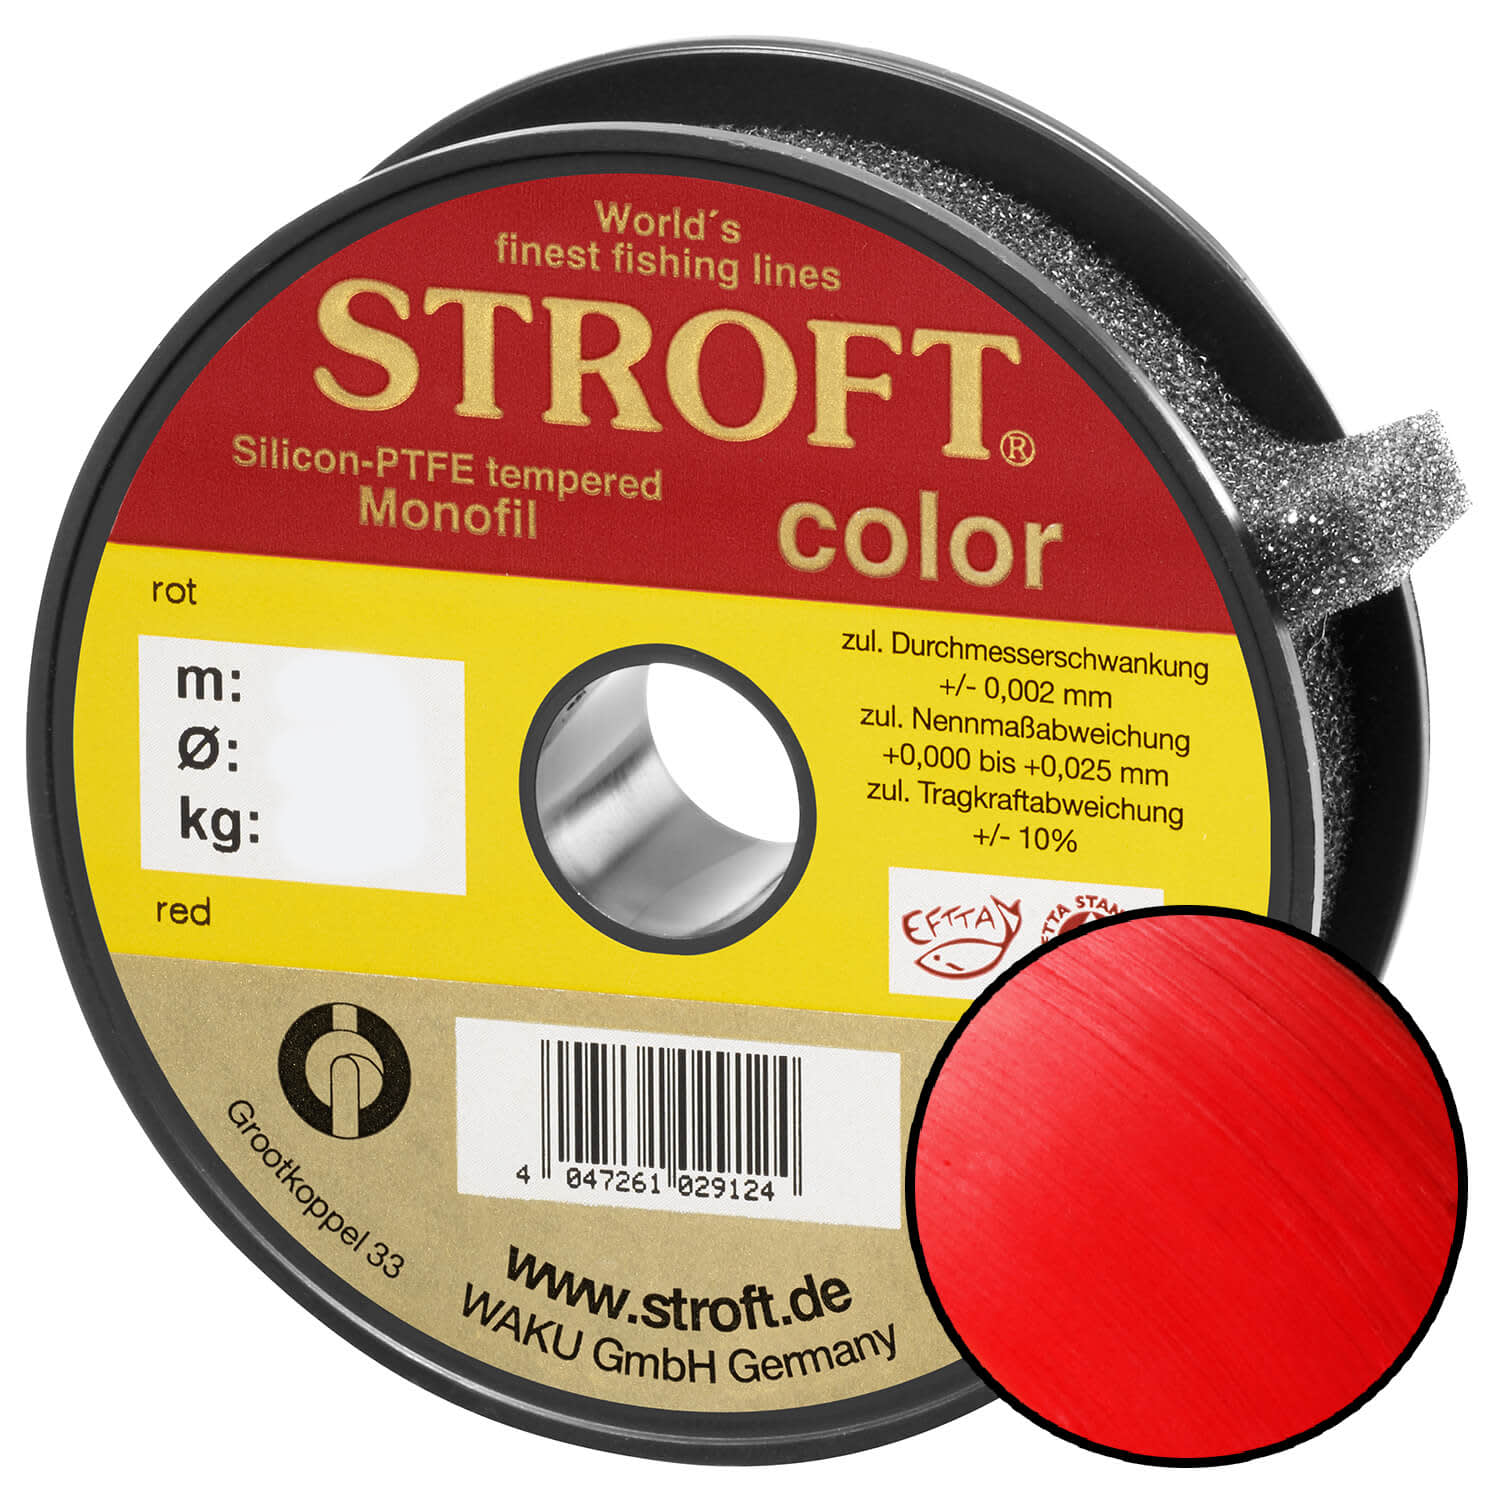 STROFT Color Monofilament Fishing Line Red 0,15mm 2,2kg | 500m